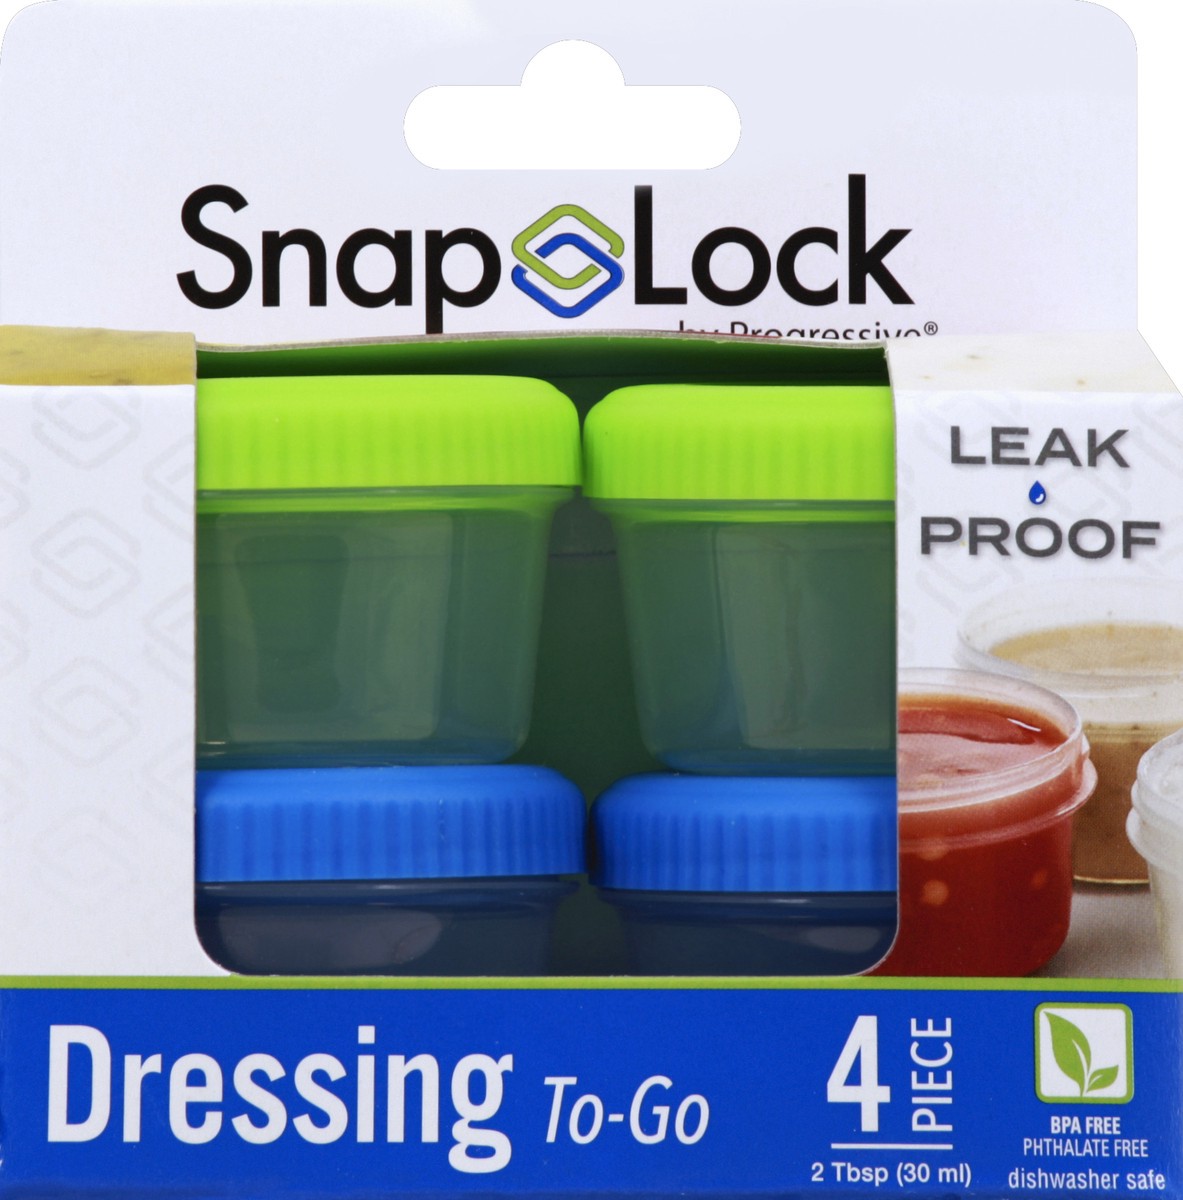 Progressive Snaplock Dressing To Go - Shop Food Storage at H-E-B